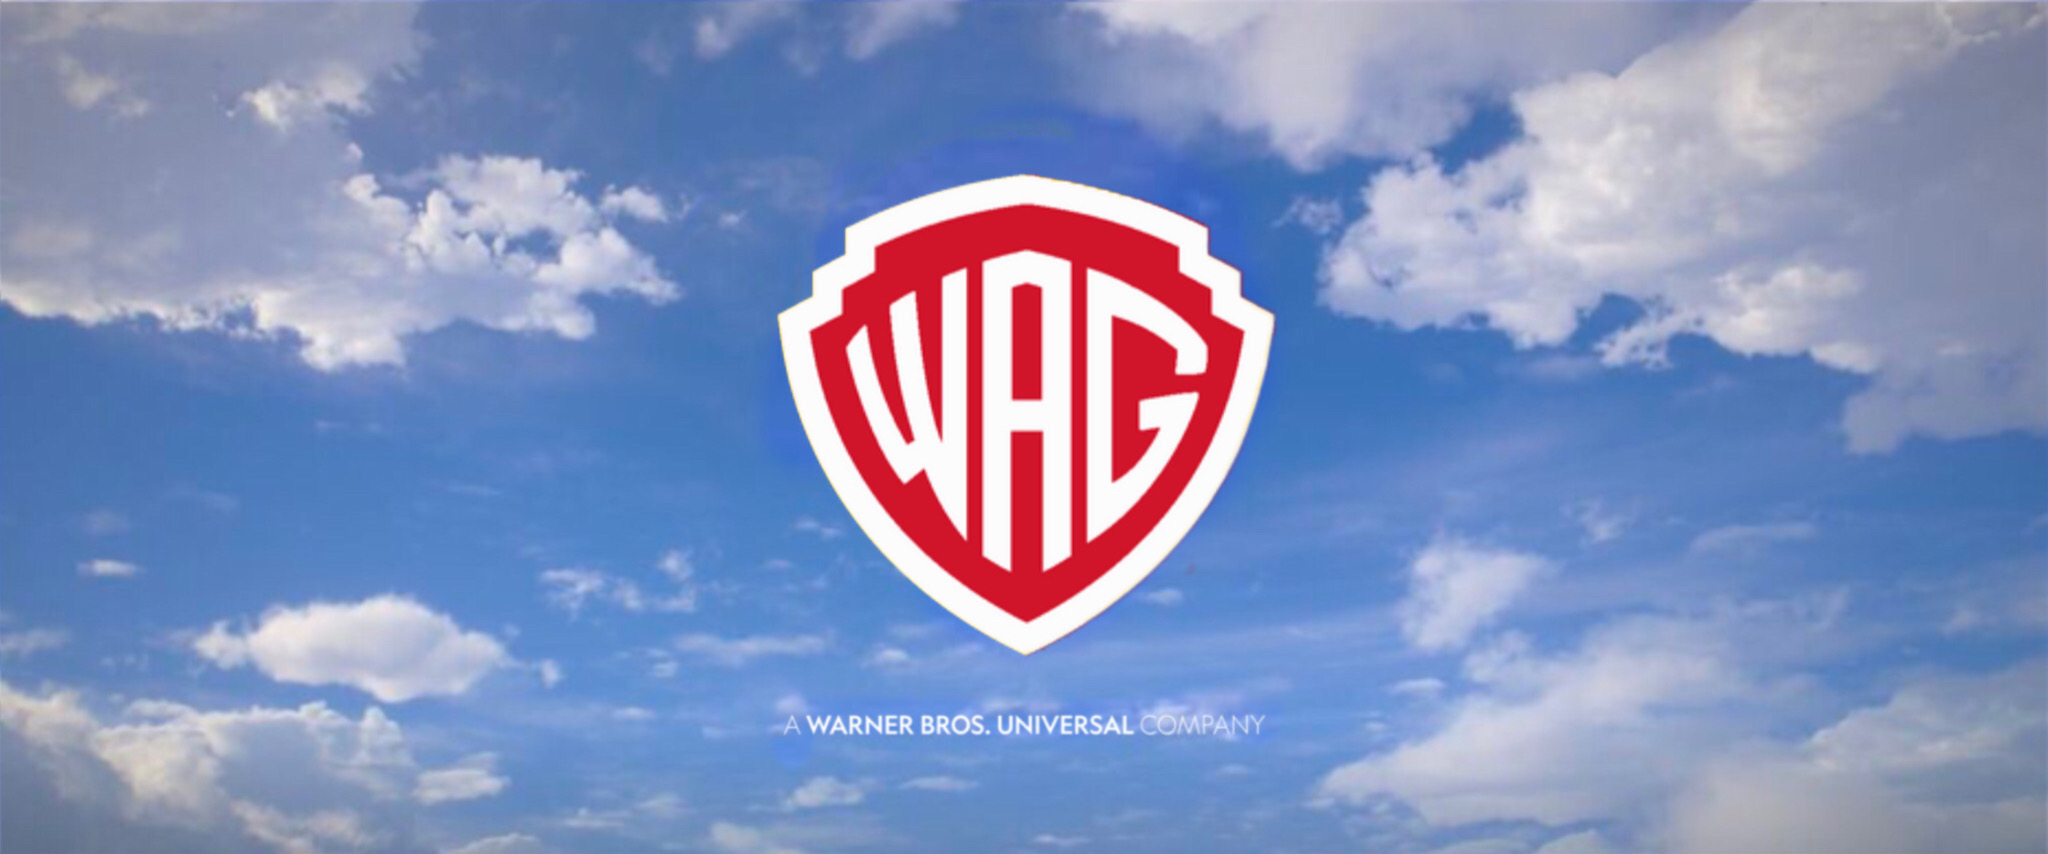 Warner Animation Group WBU Byline (CinemaScope) by